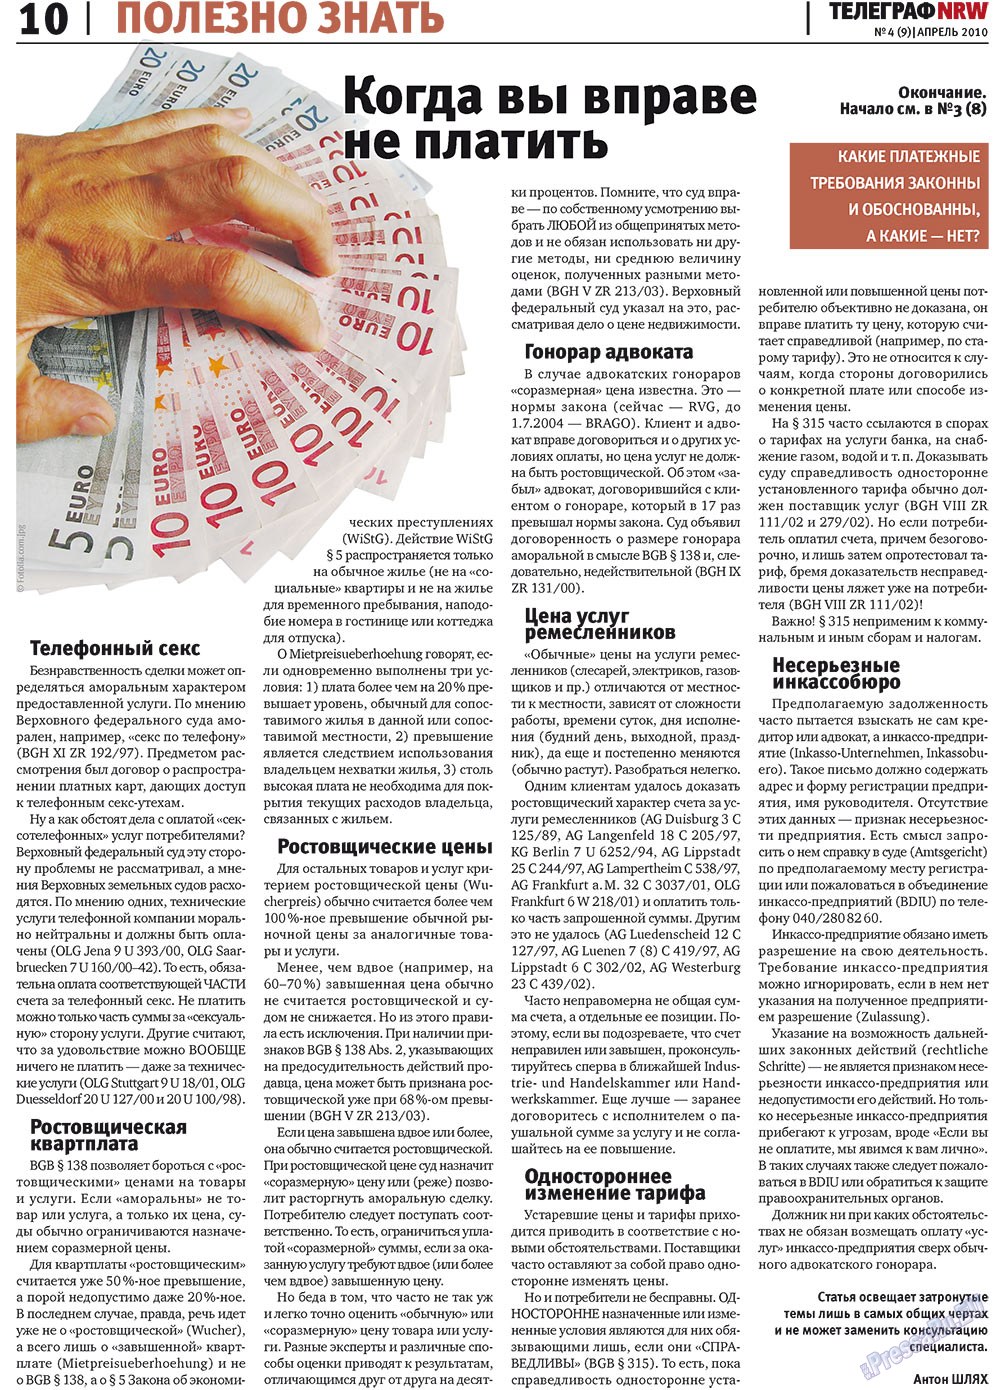 Телеграф NRW, газета. 2010 №4 стр.10